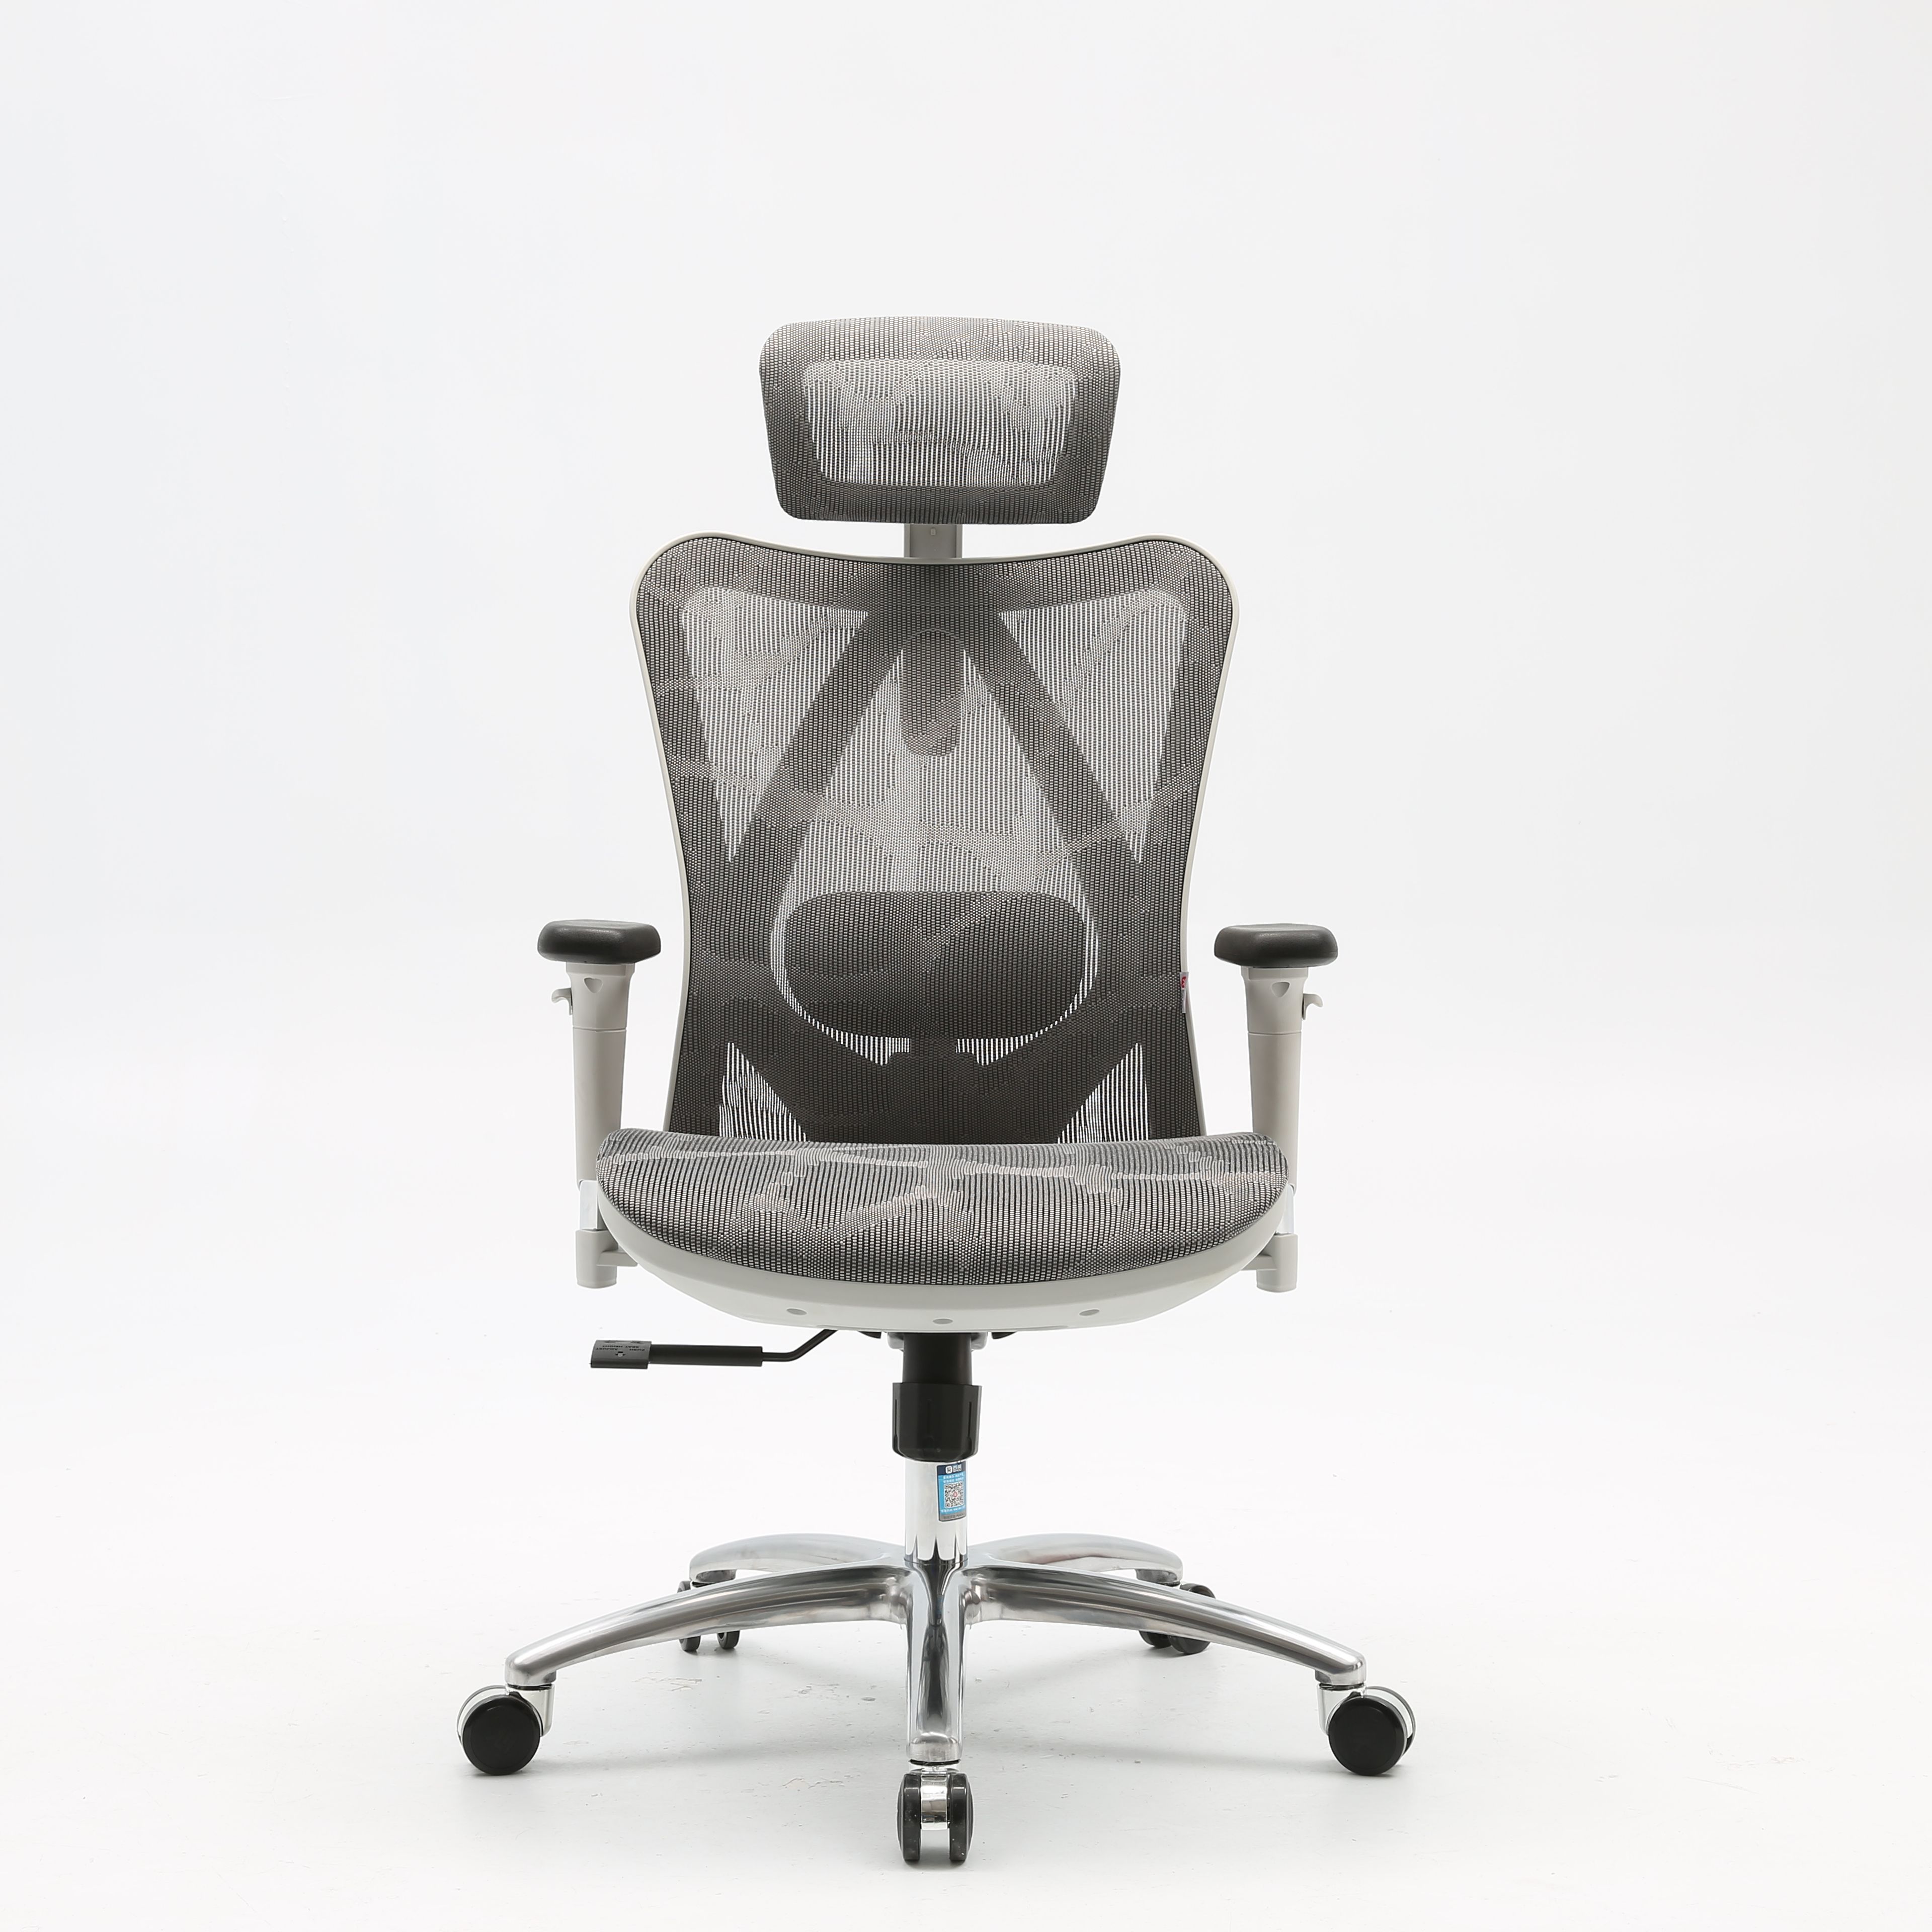 Sihoo M57 Ergonomic Chair